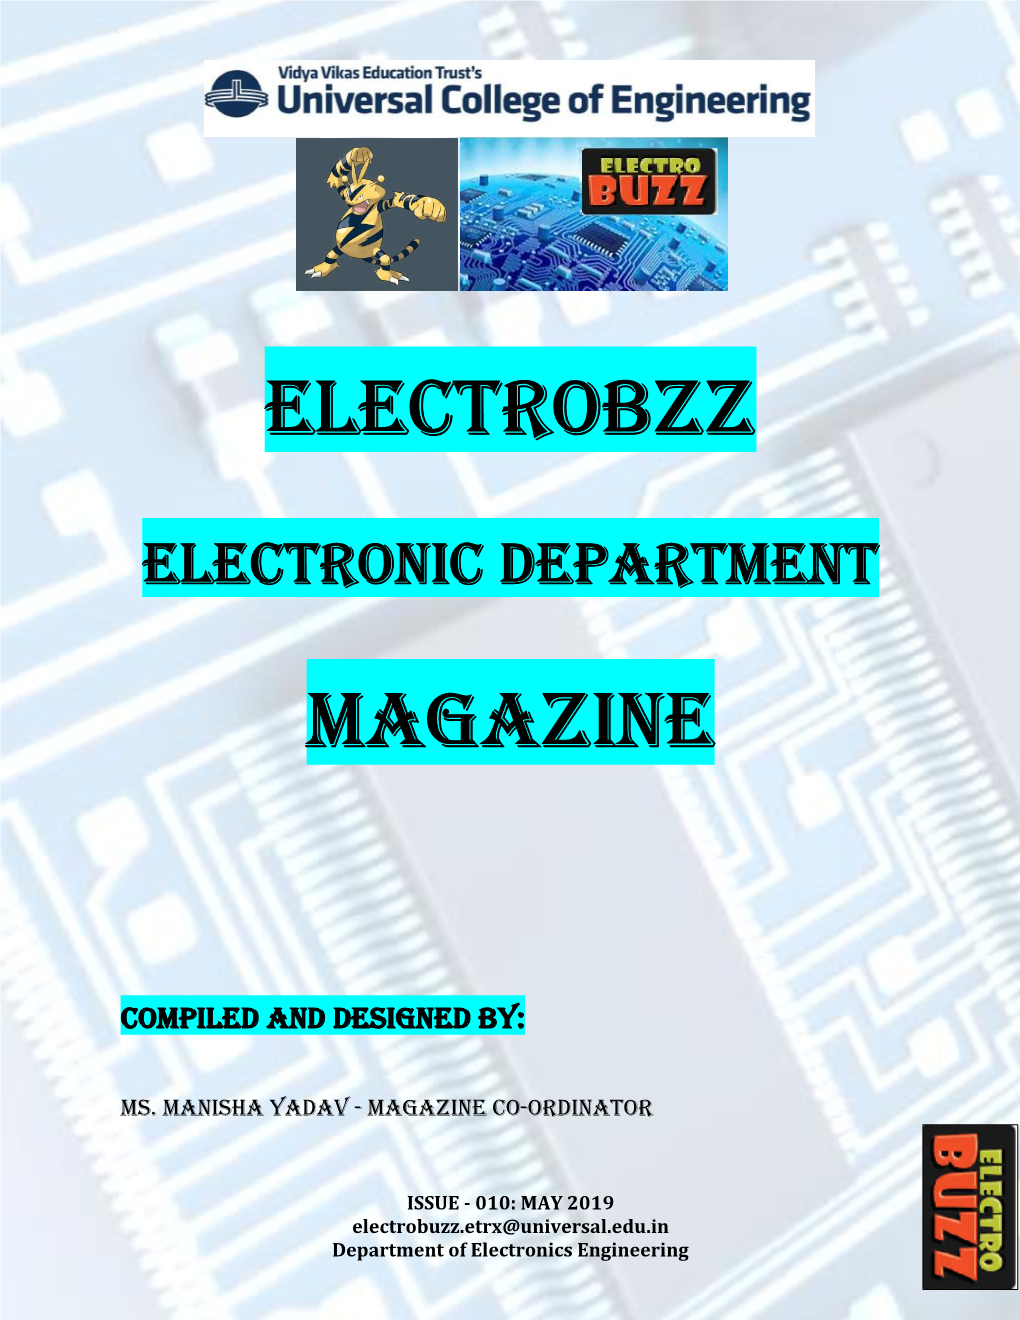 Electrobzz Magazine